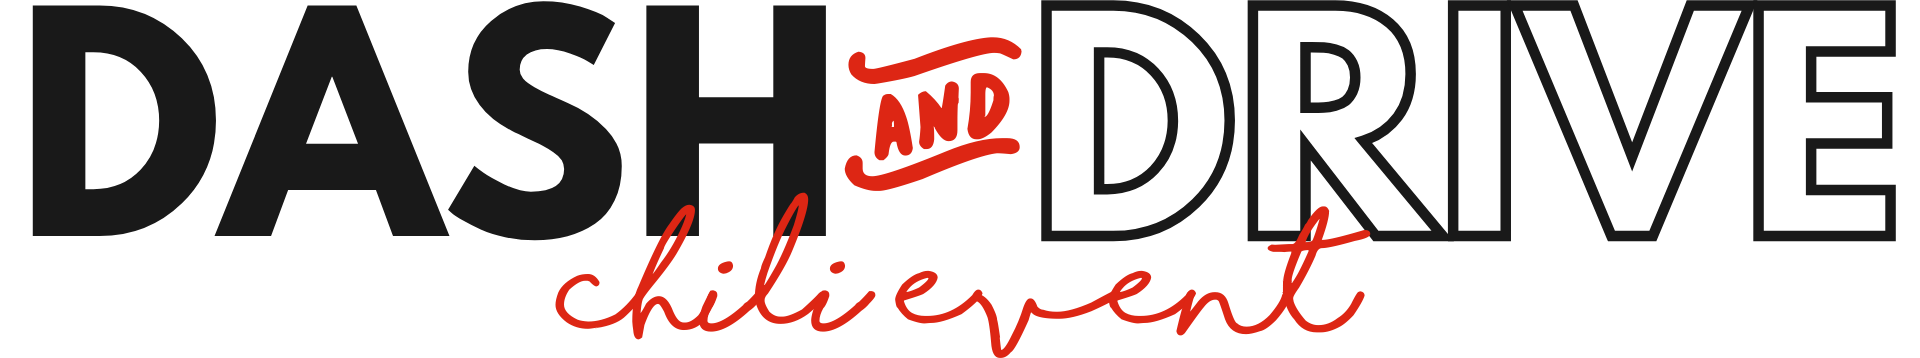 dash-and-drive-logo